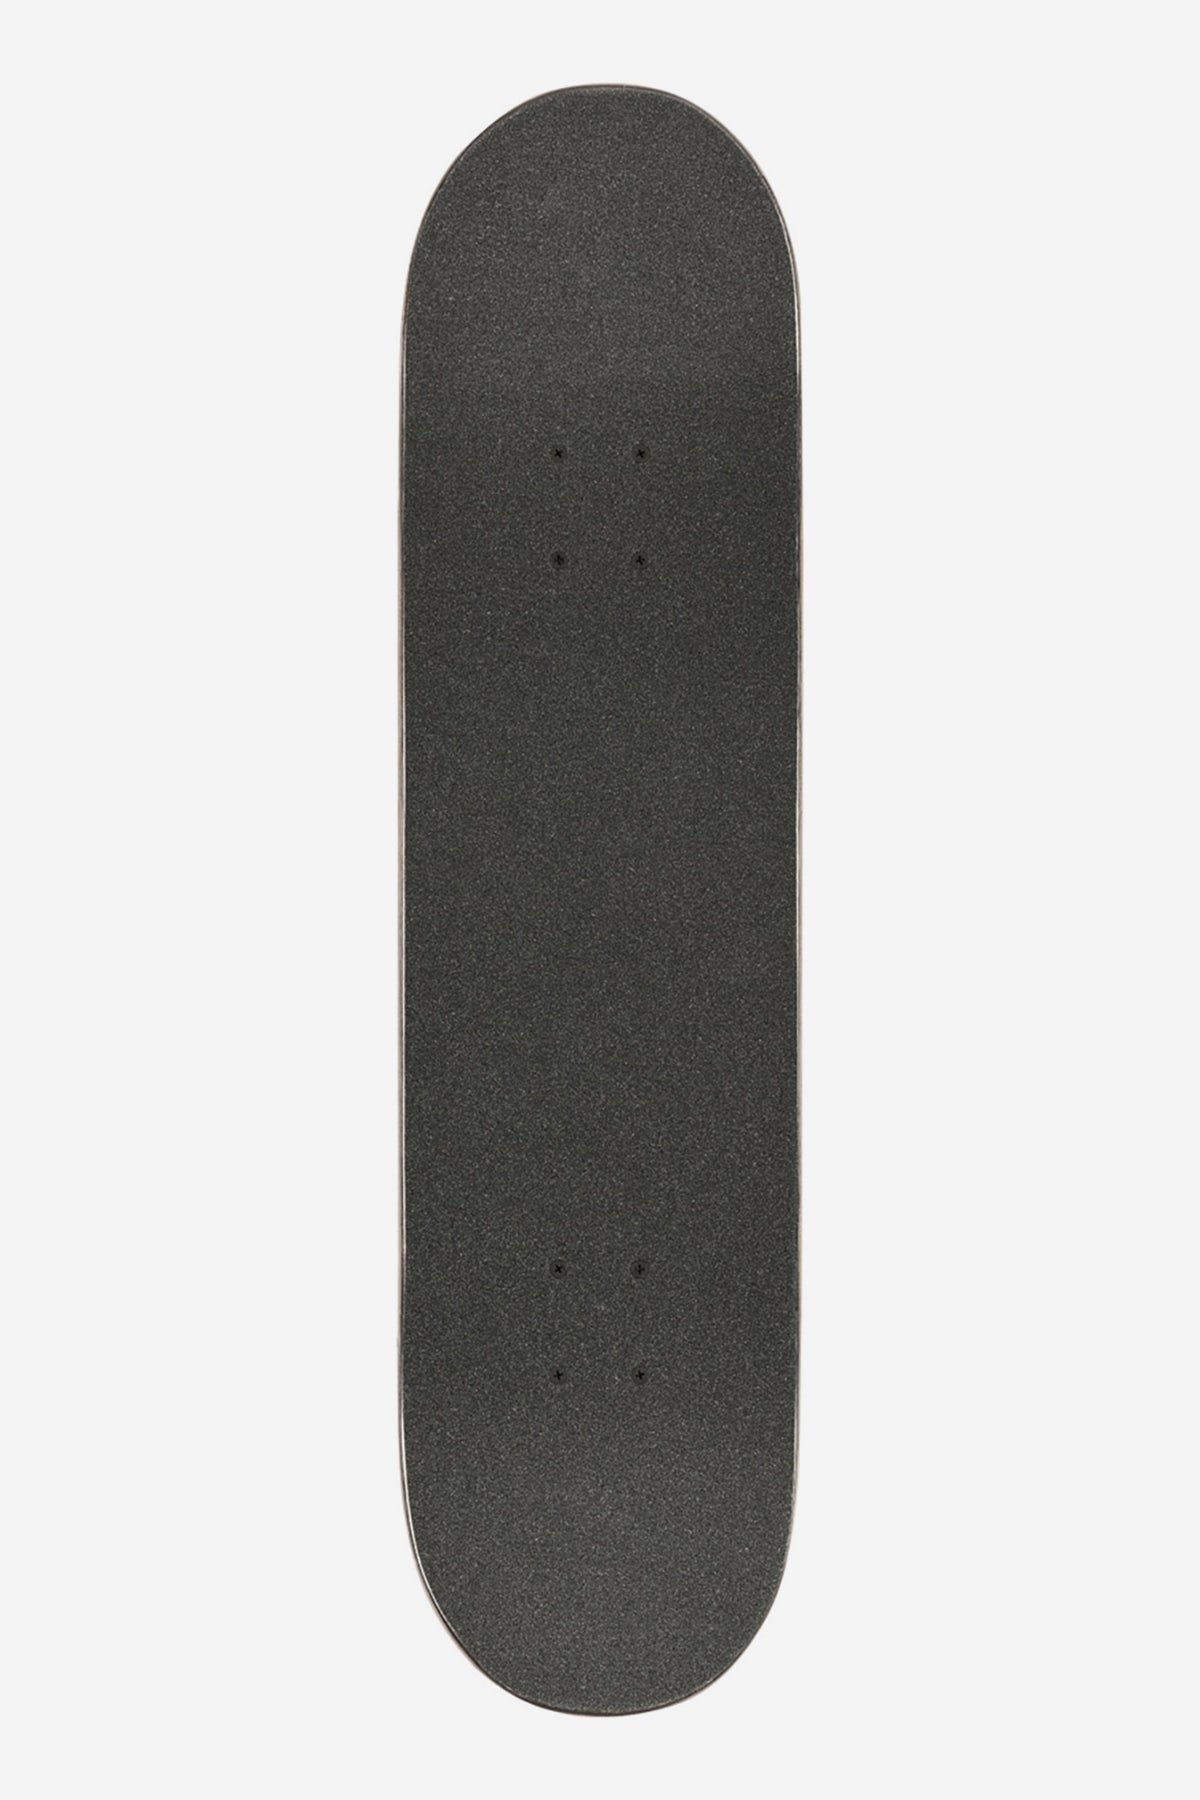 Globe - Goodstock - Off White - 8.0" Complete Skateboard